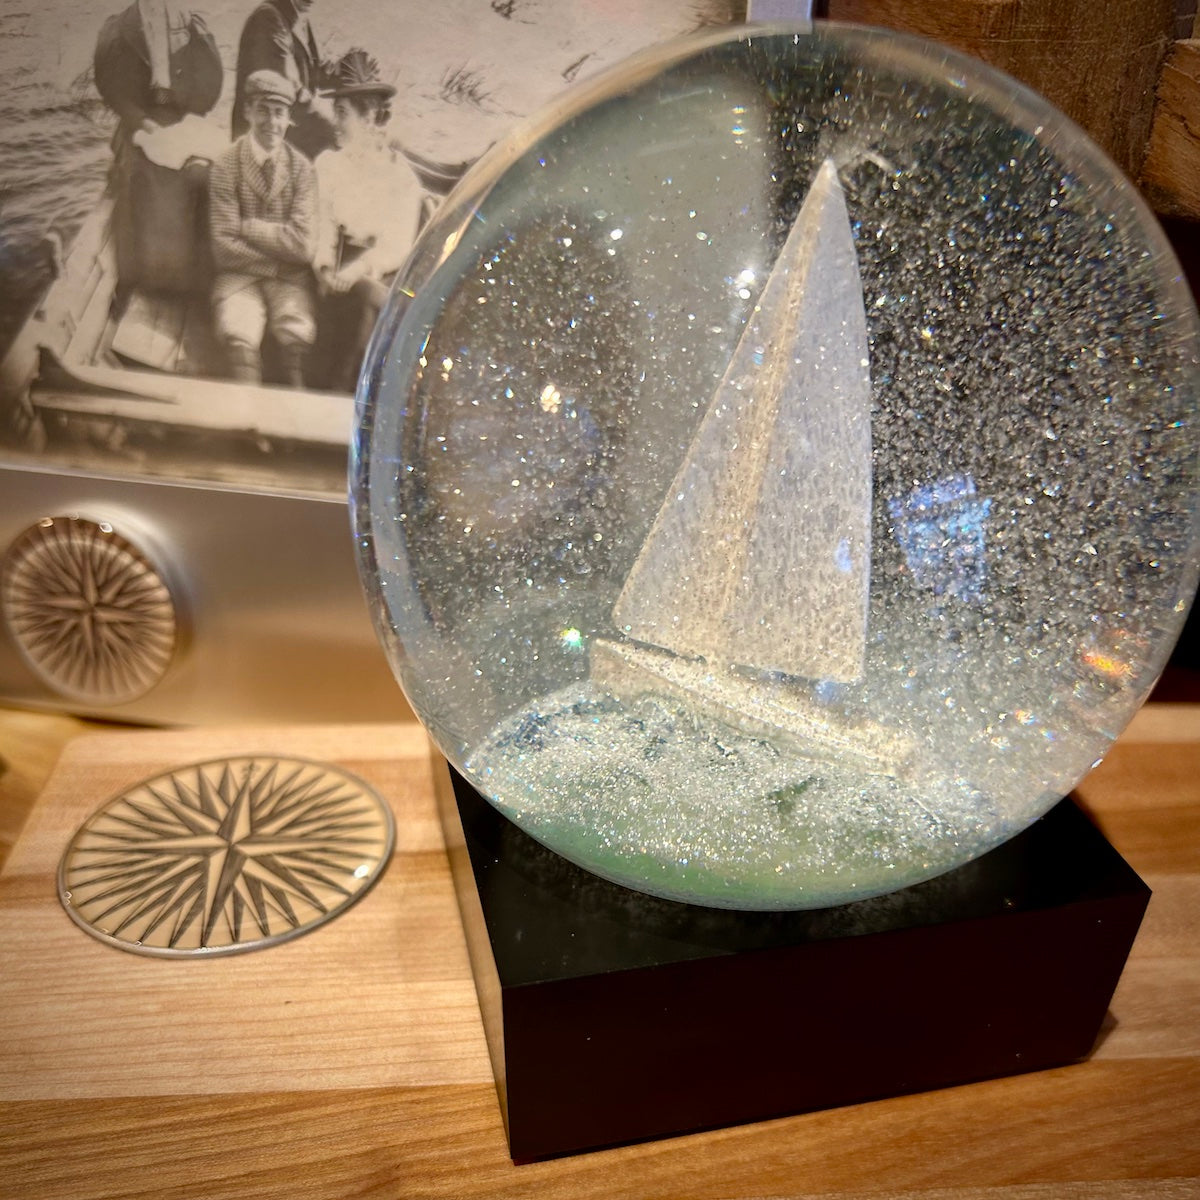 Sailboat Snow Globe